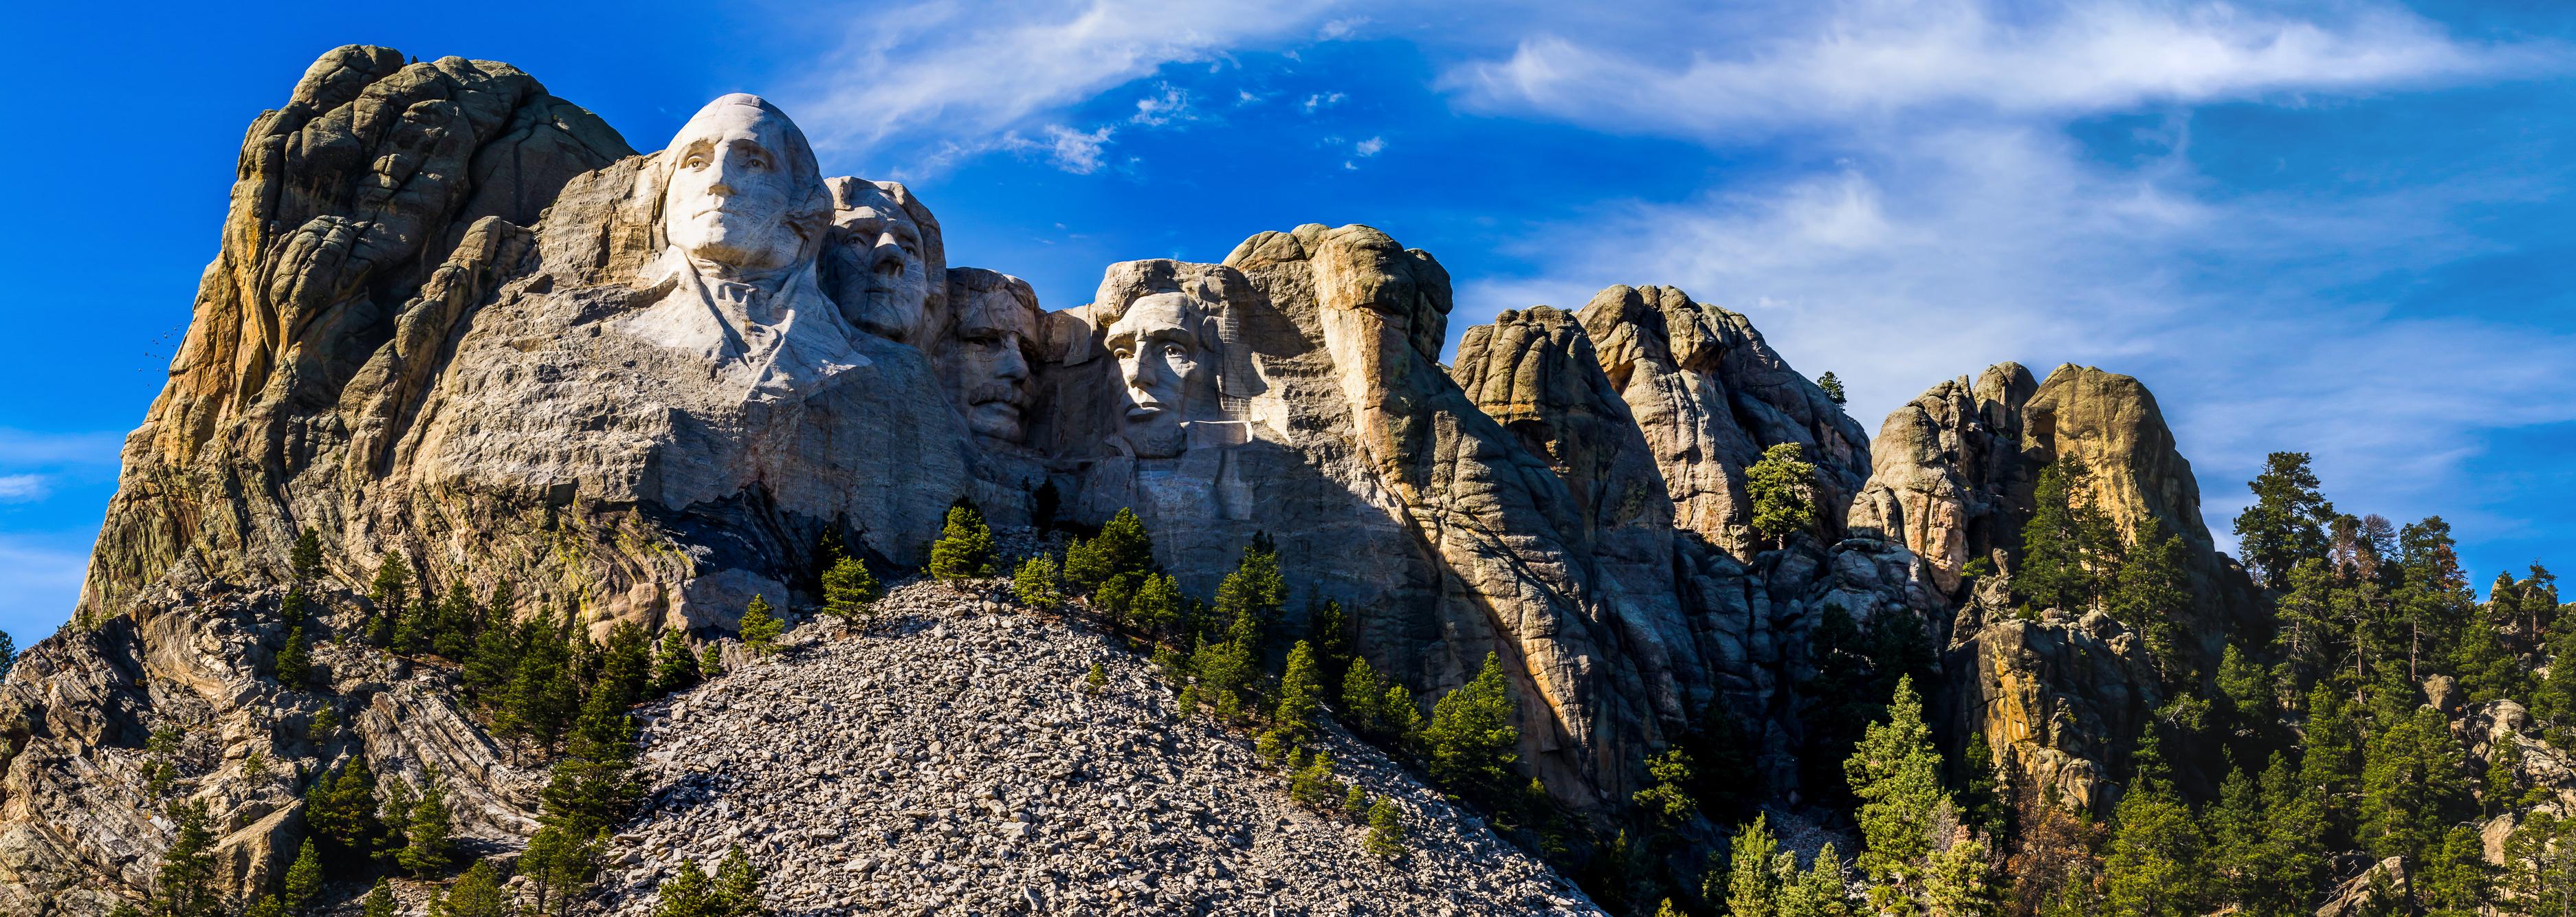 Mount Rushmore Panorama - Image